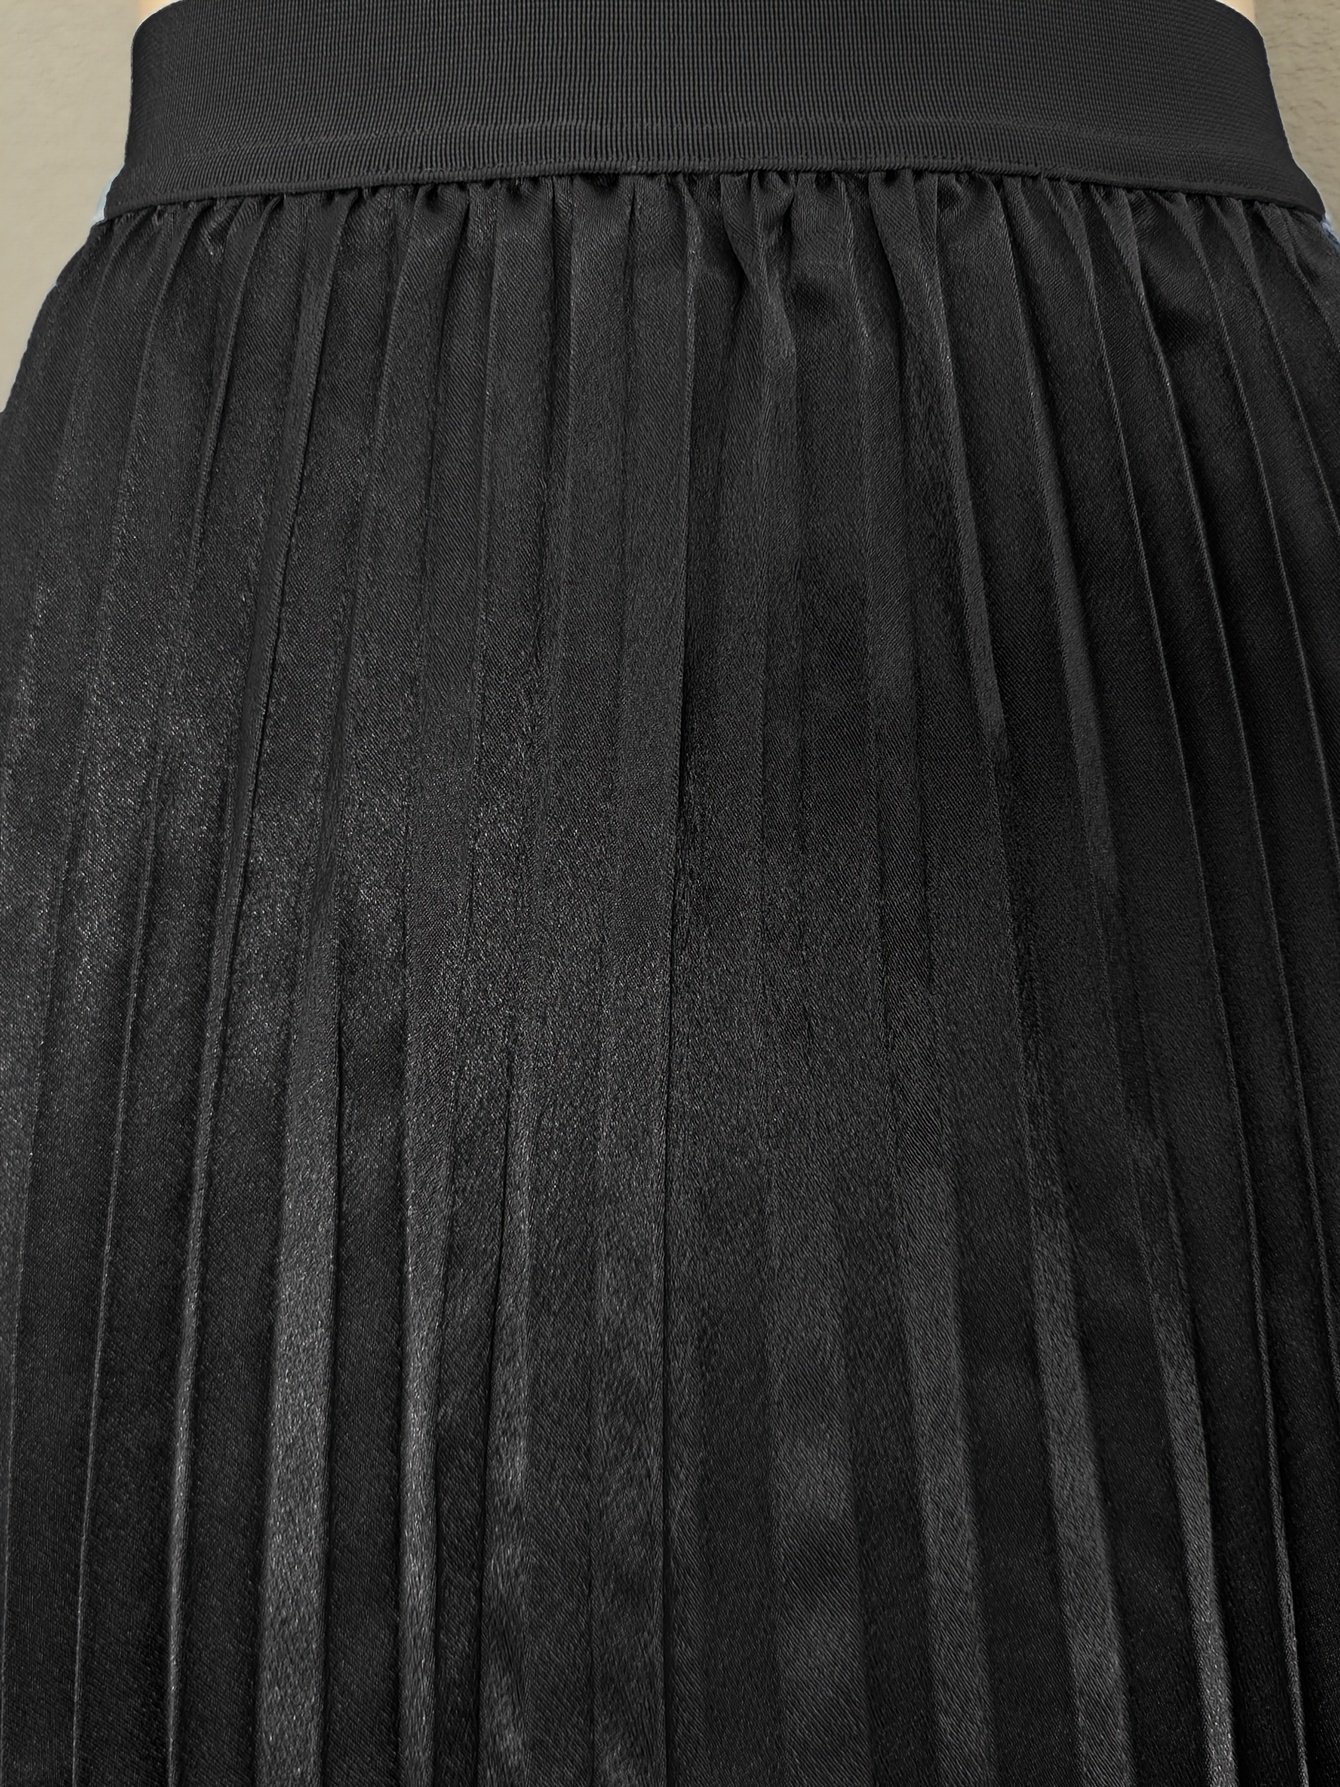 Buy Women Black Solid Accordion Pleat Maxi Flared Skirt - Skirts